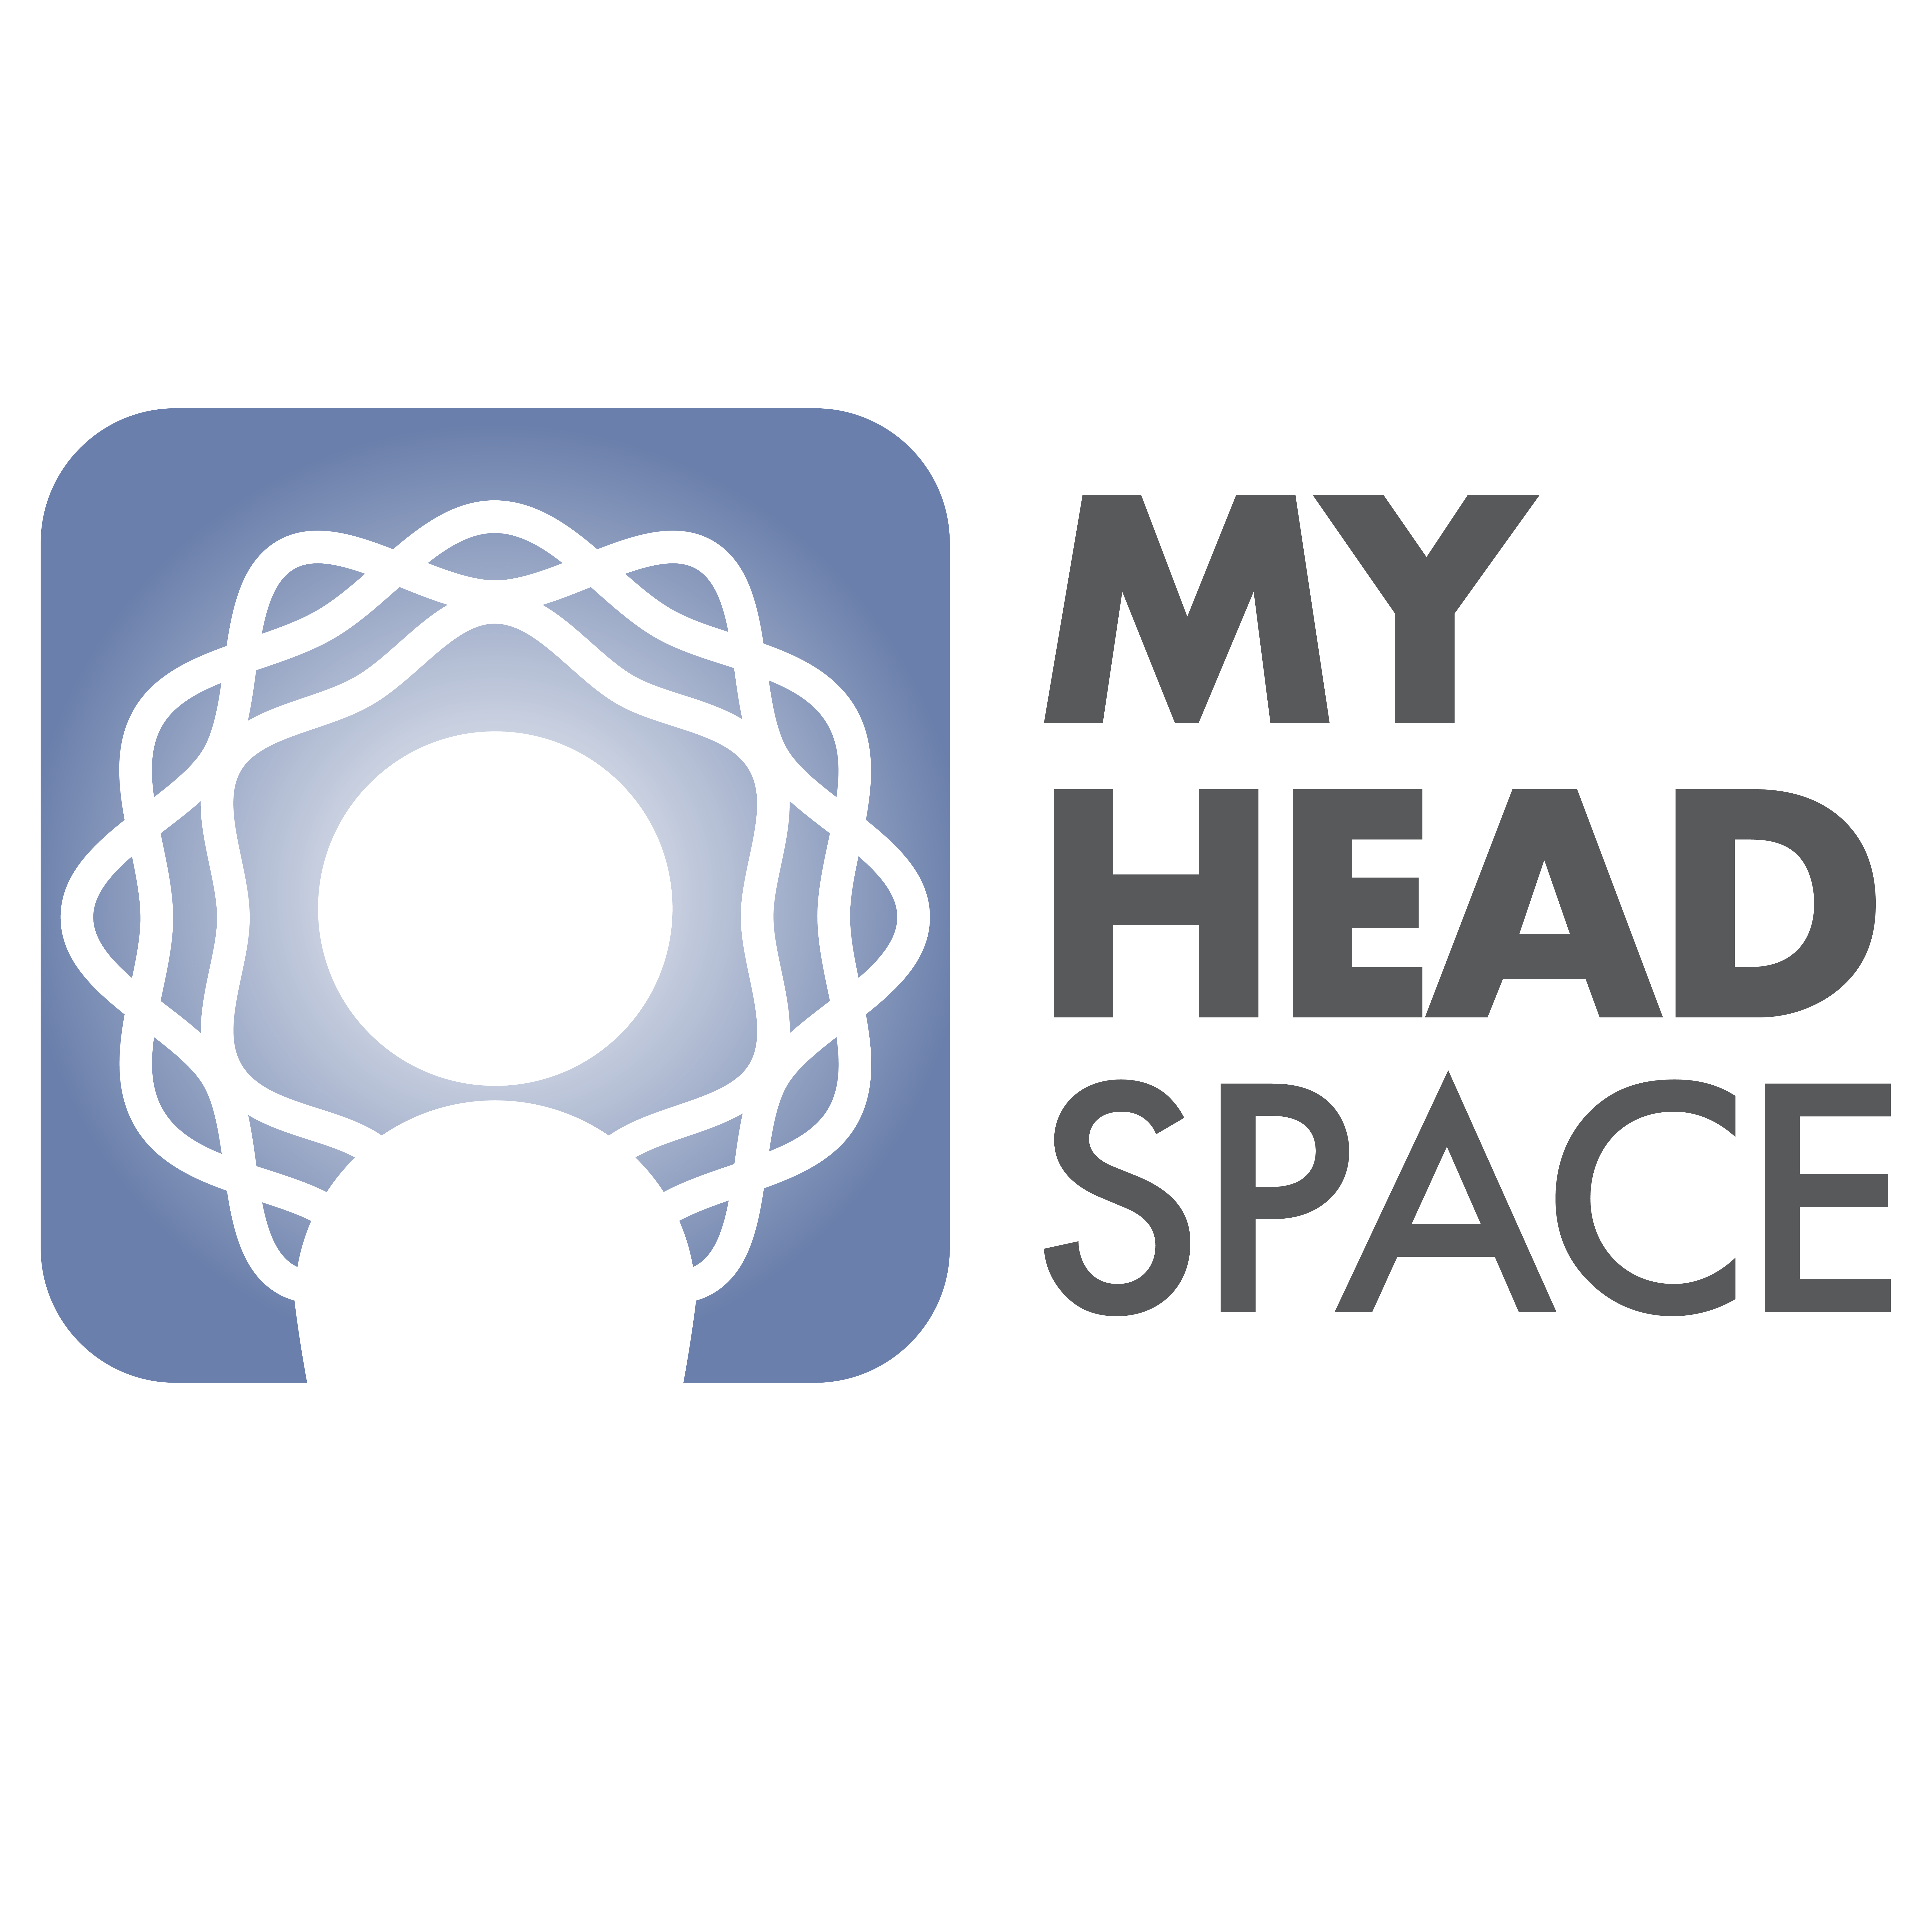 Myhead Space